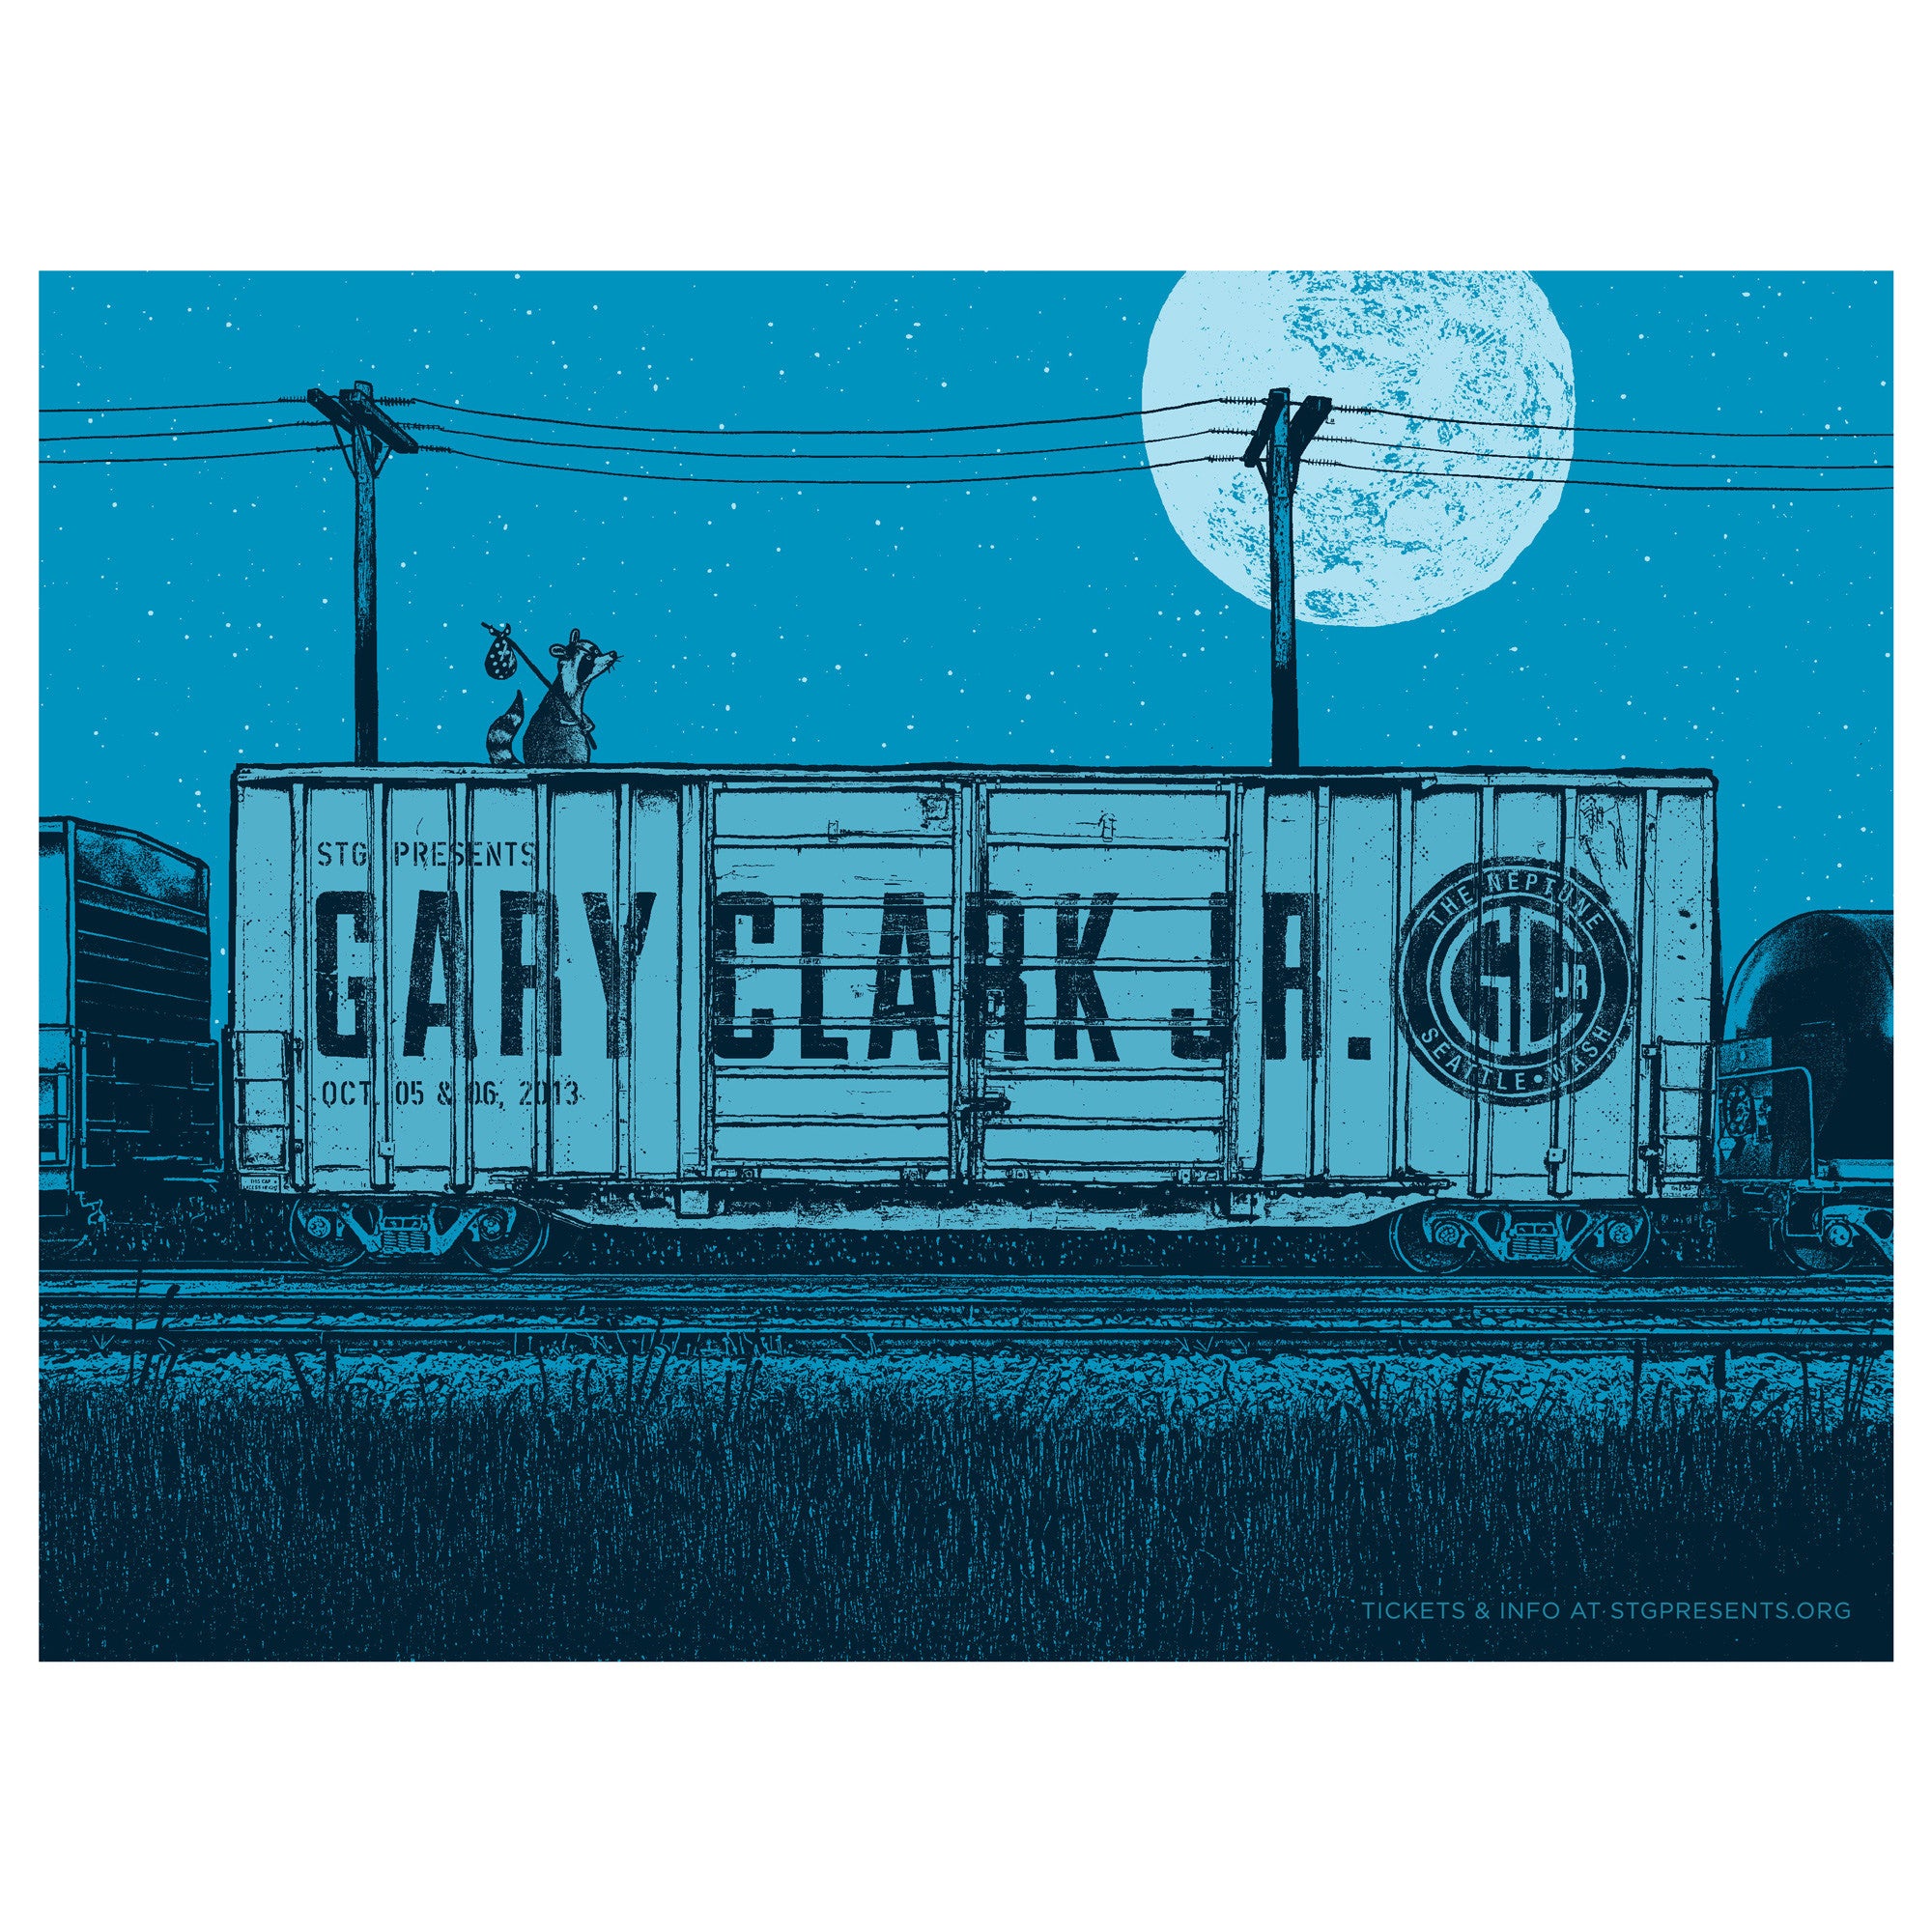 Gary Clark Jr. Poster